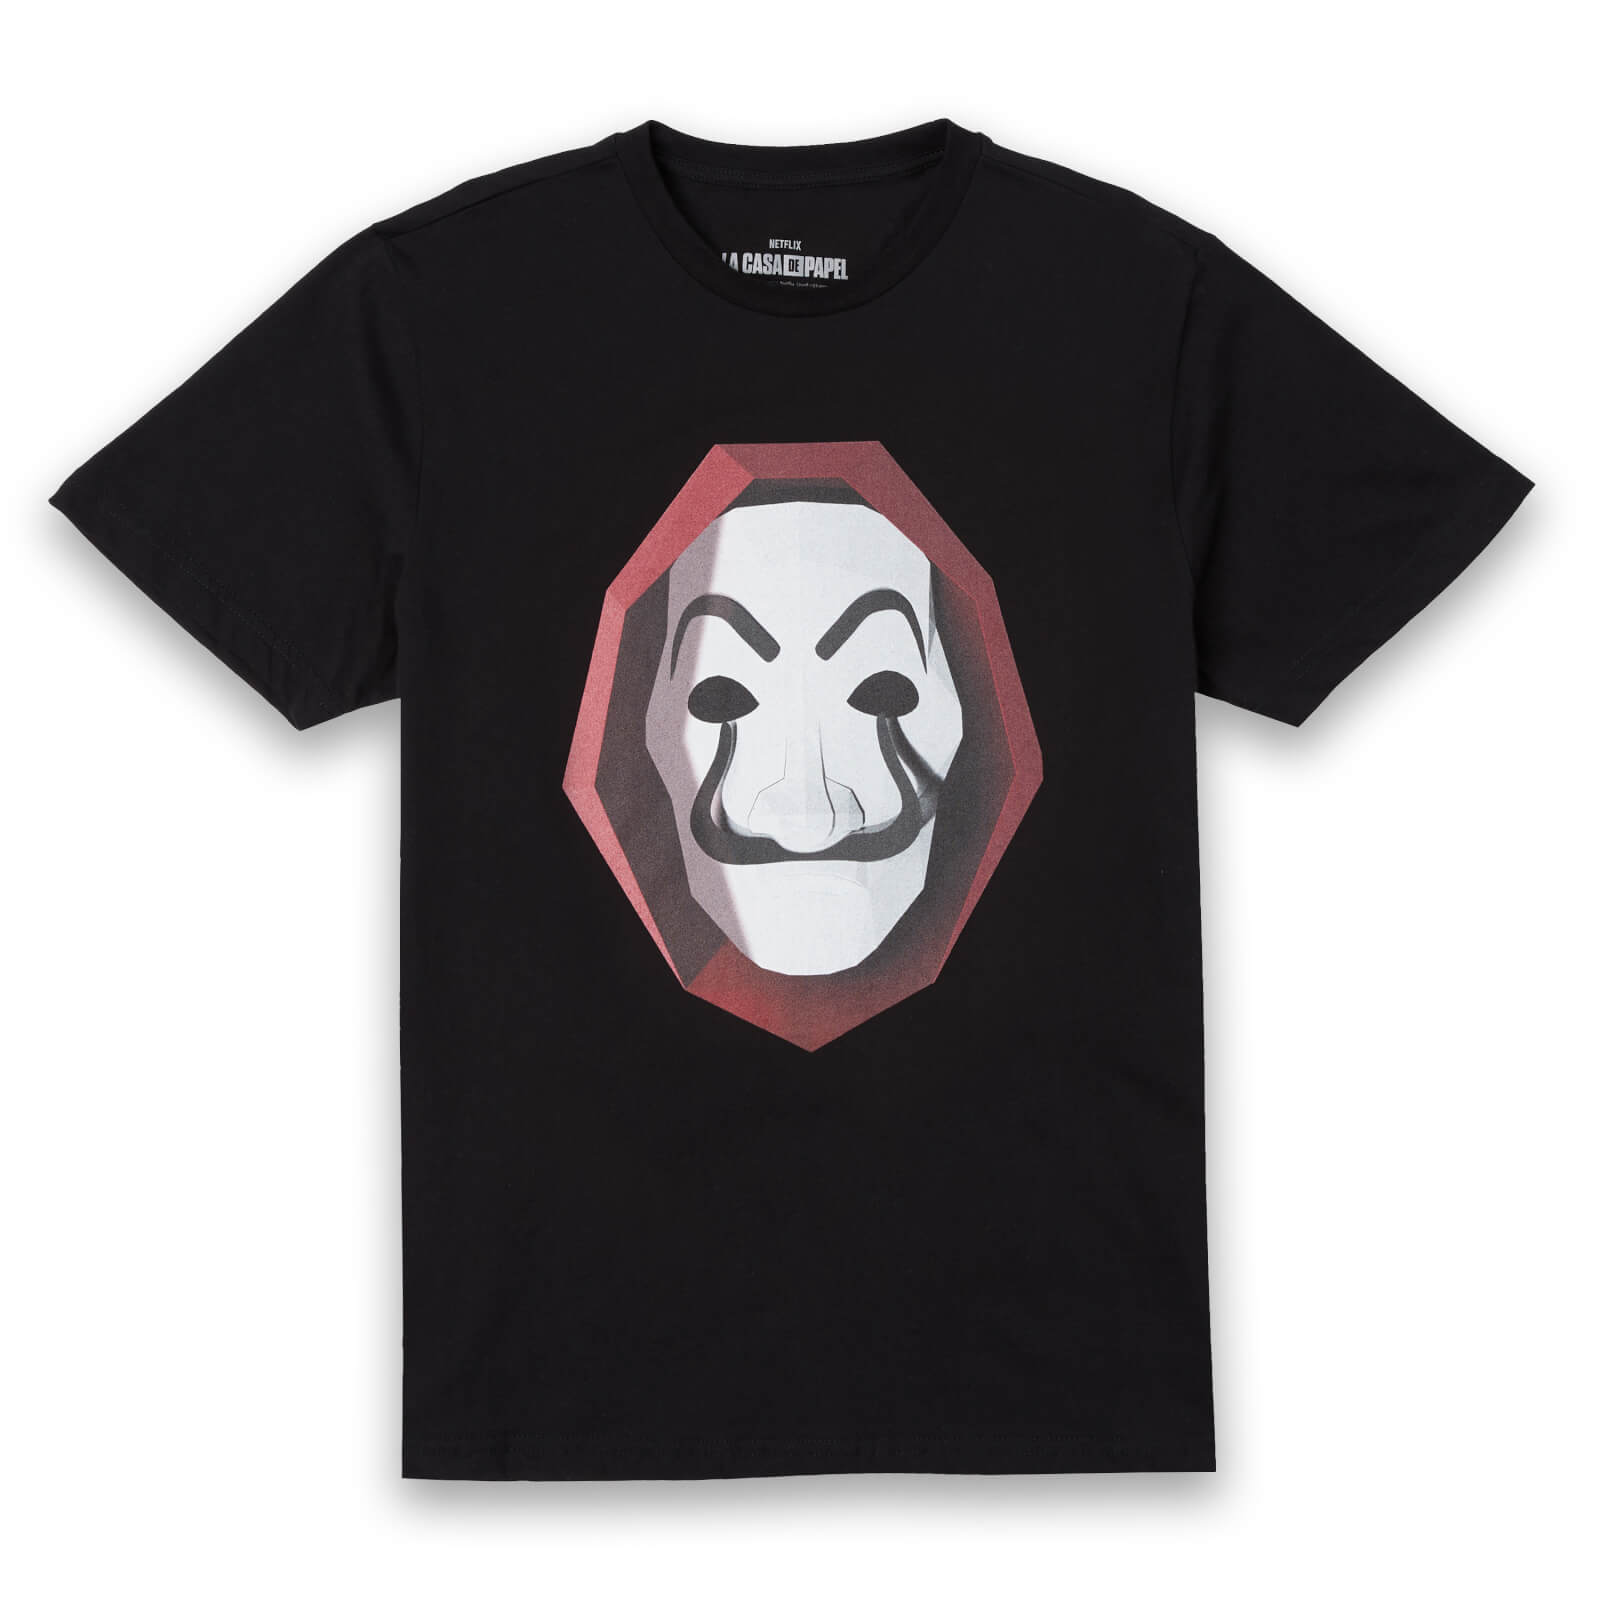 Money Heist 3-D Dali Mask Unisex T-Shirt - Black - XS - Black